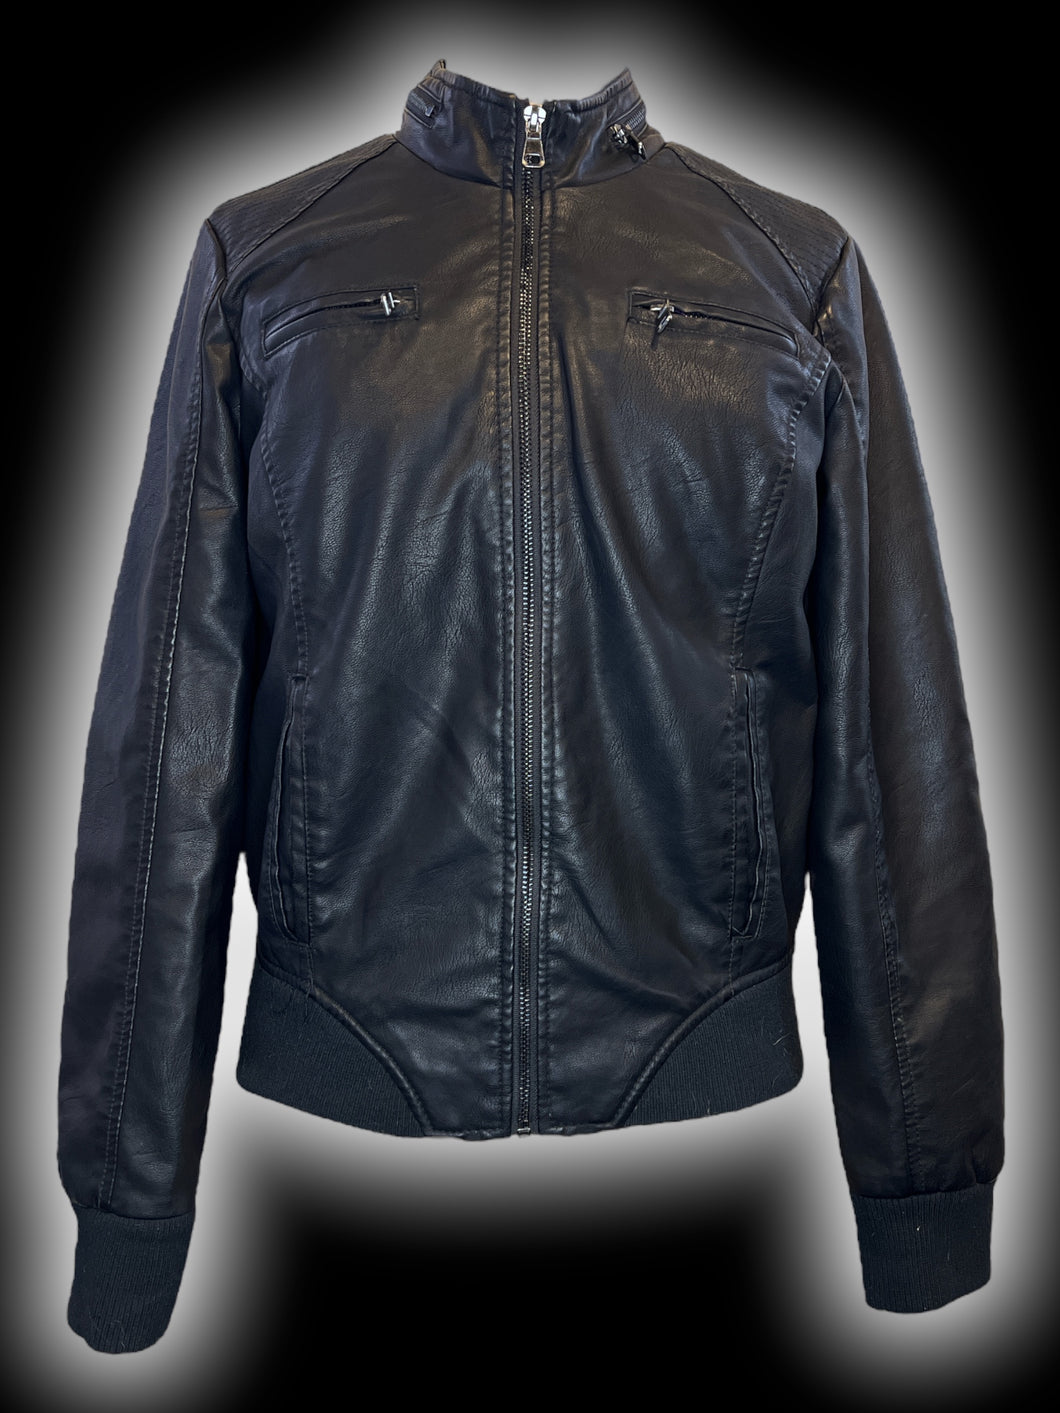 M Black pleather long sleeve zip up moto style jacket w/ pockets